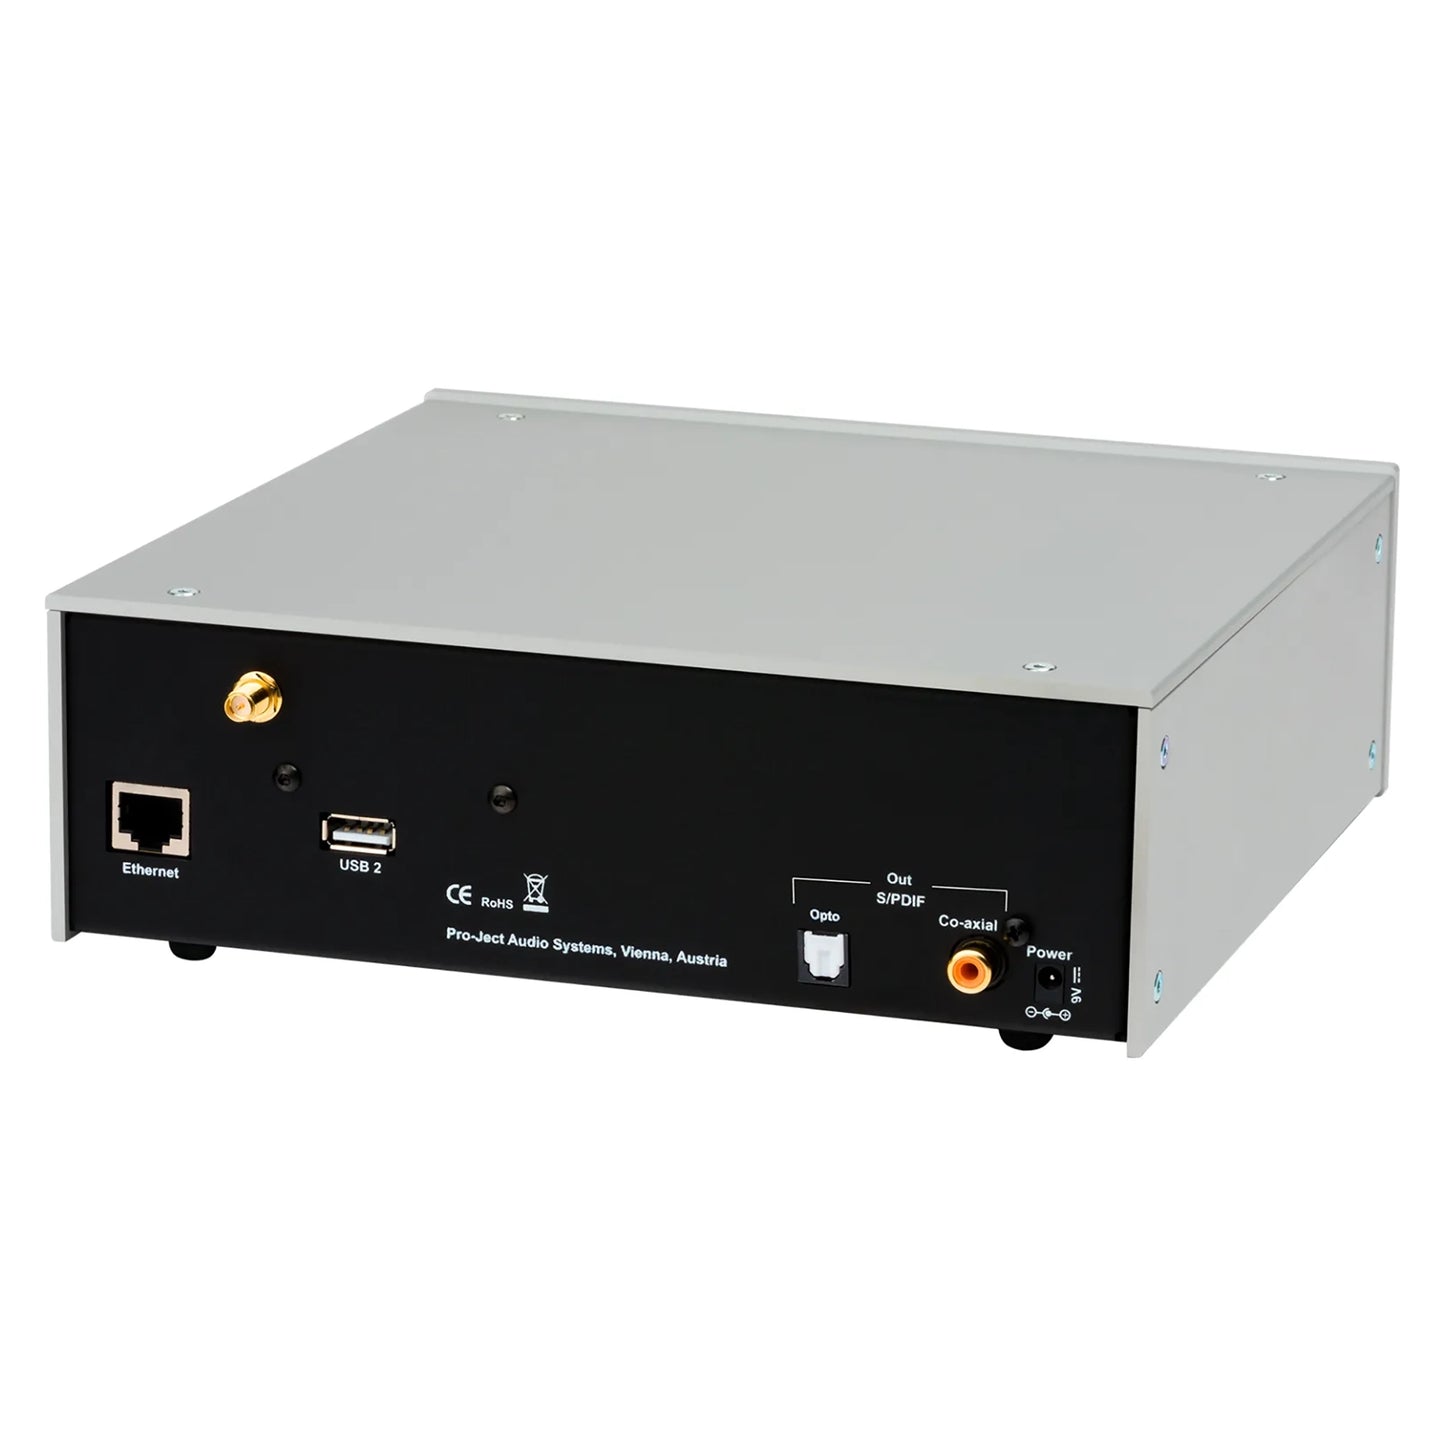 bind øge træfning Pro-Ject Stream Box DS2T – Upscale Audio